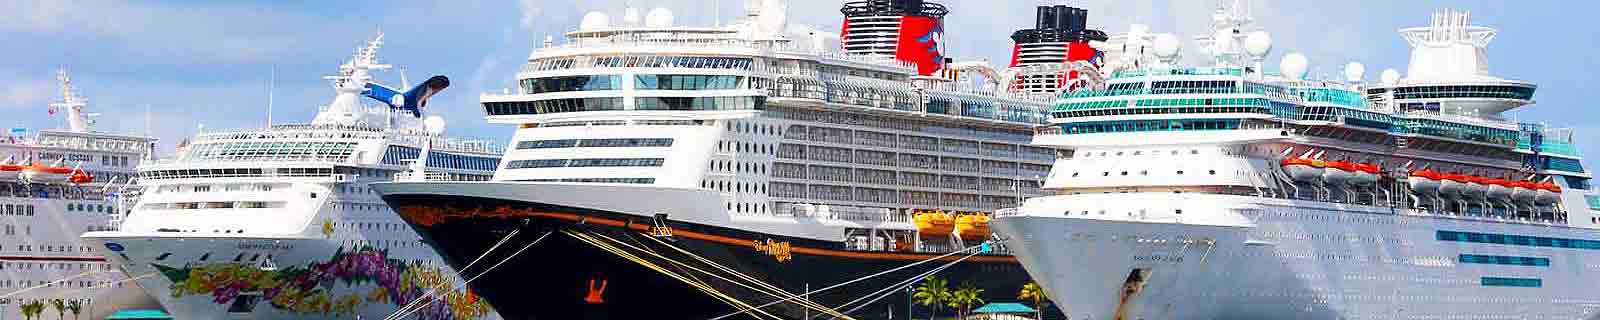 Cruise ships docked in Nassau cruise port